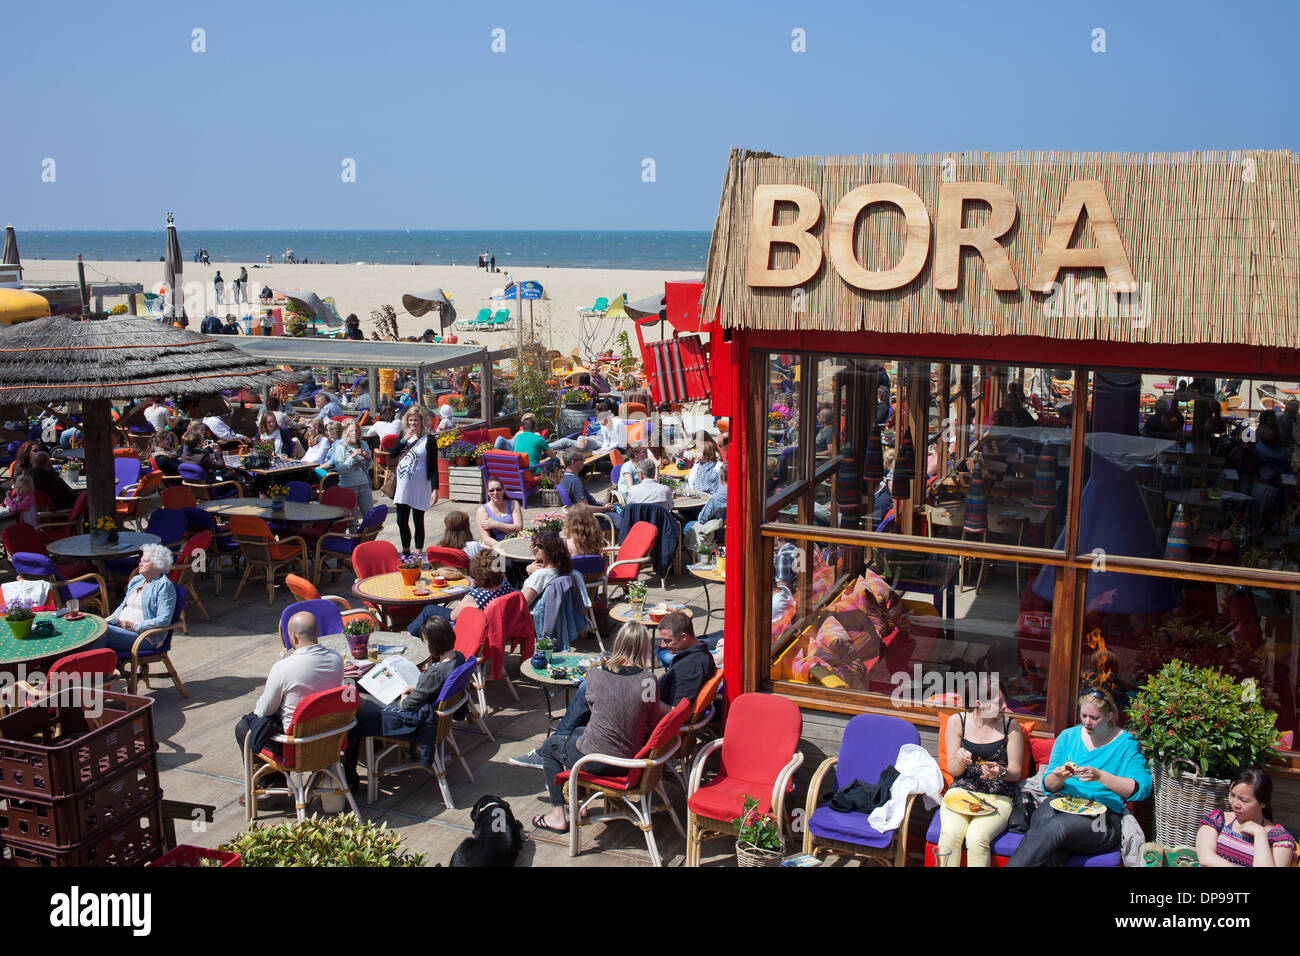 Bora Bora beach club restaurant on Scheveningen area by the North Sea in the Hague, Holland, Netherlands. Stock Photo